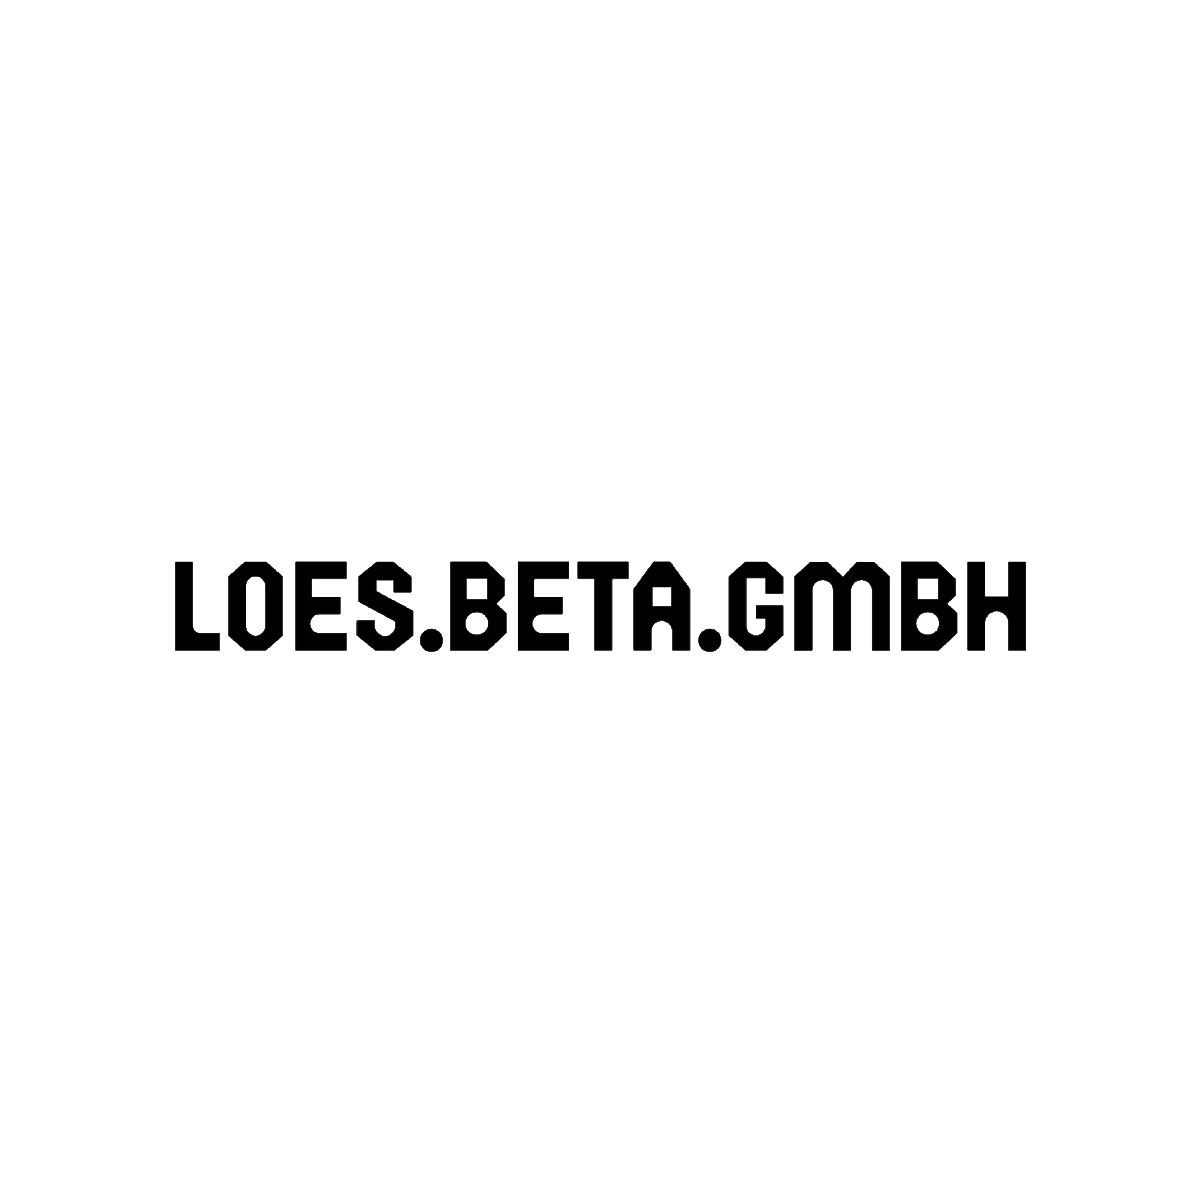 LOES.BETA.GMBH